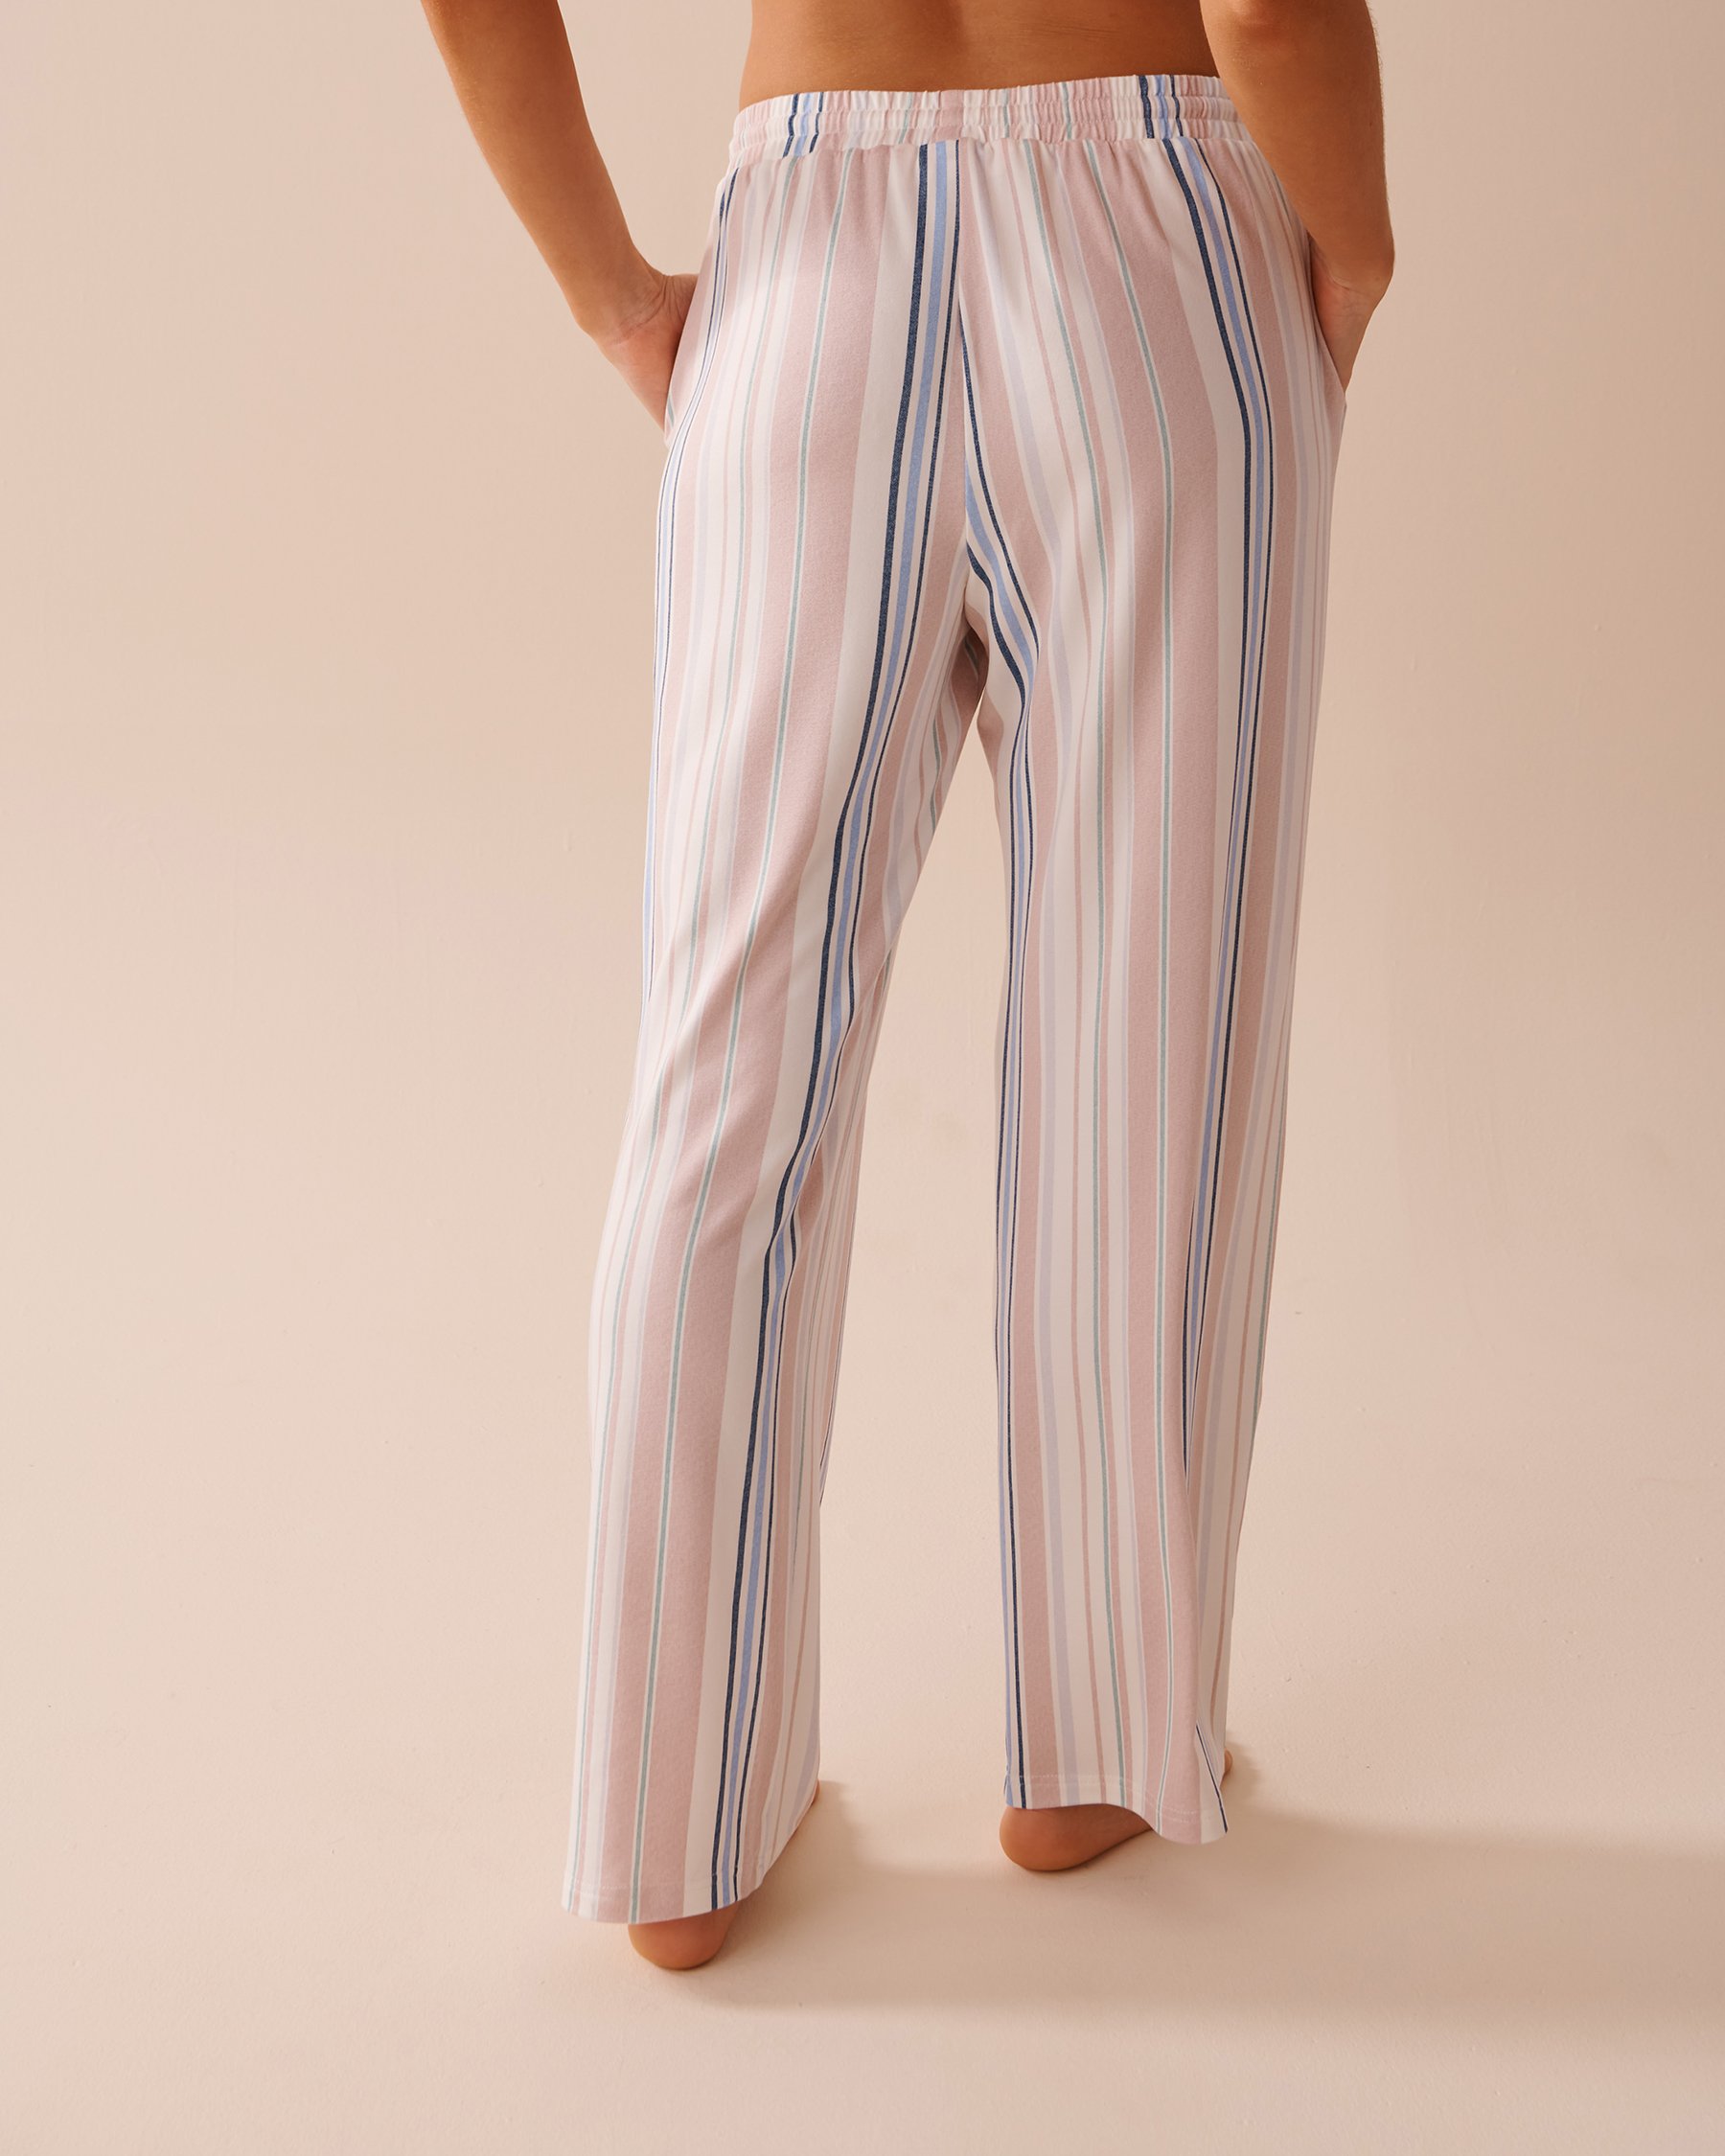 femofit, Intimates & Sleepwear, Femofit Comfy Flowy Pajama Set Medium